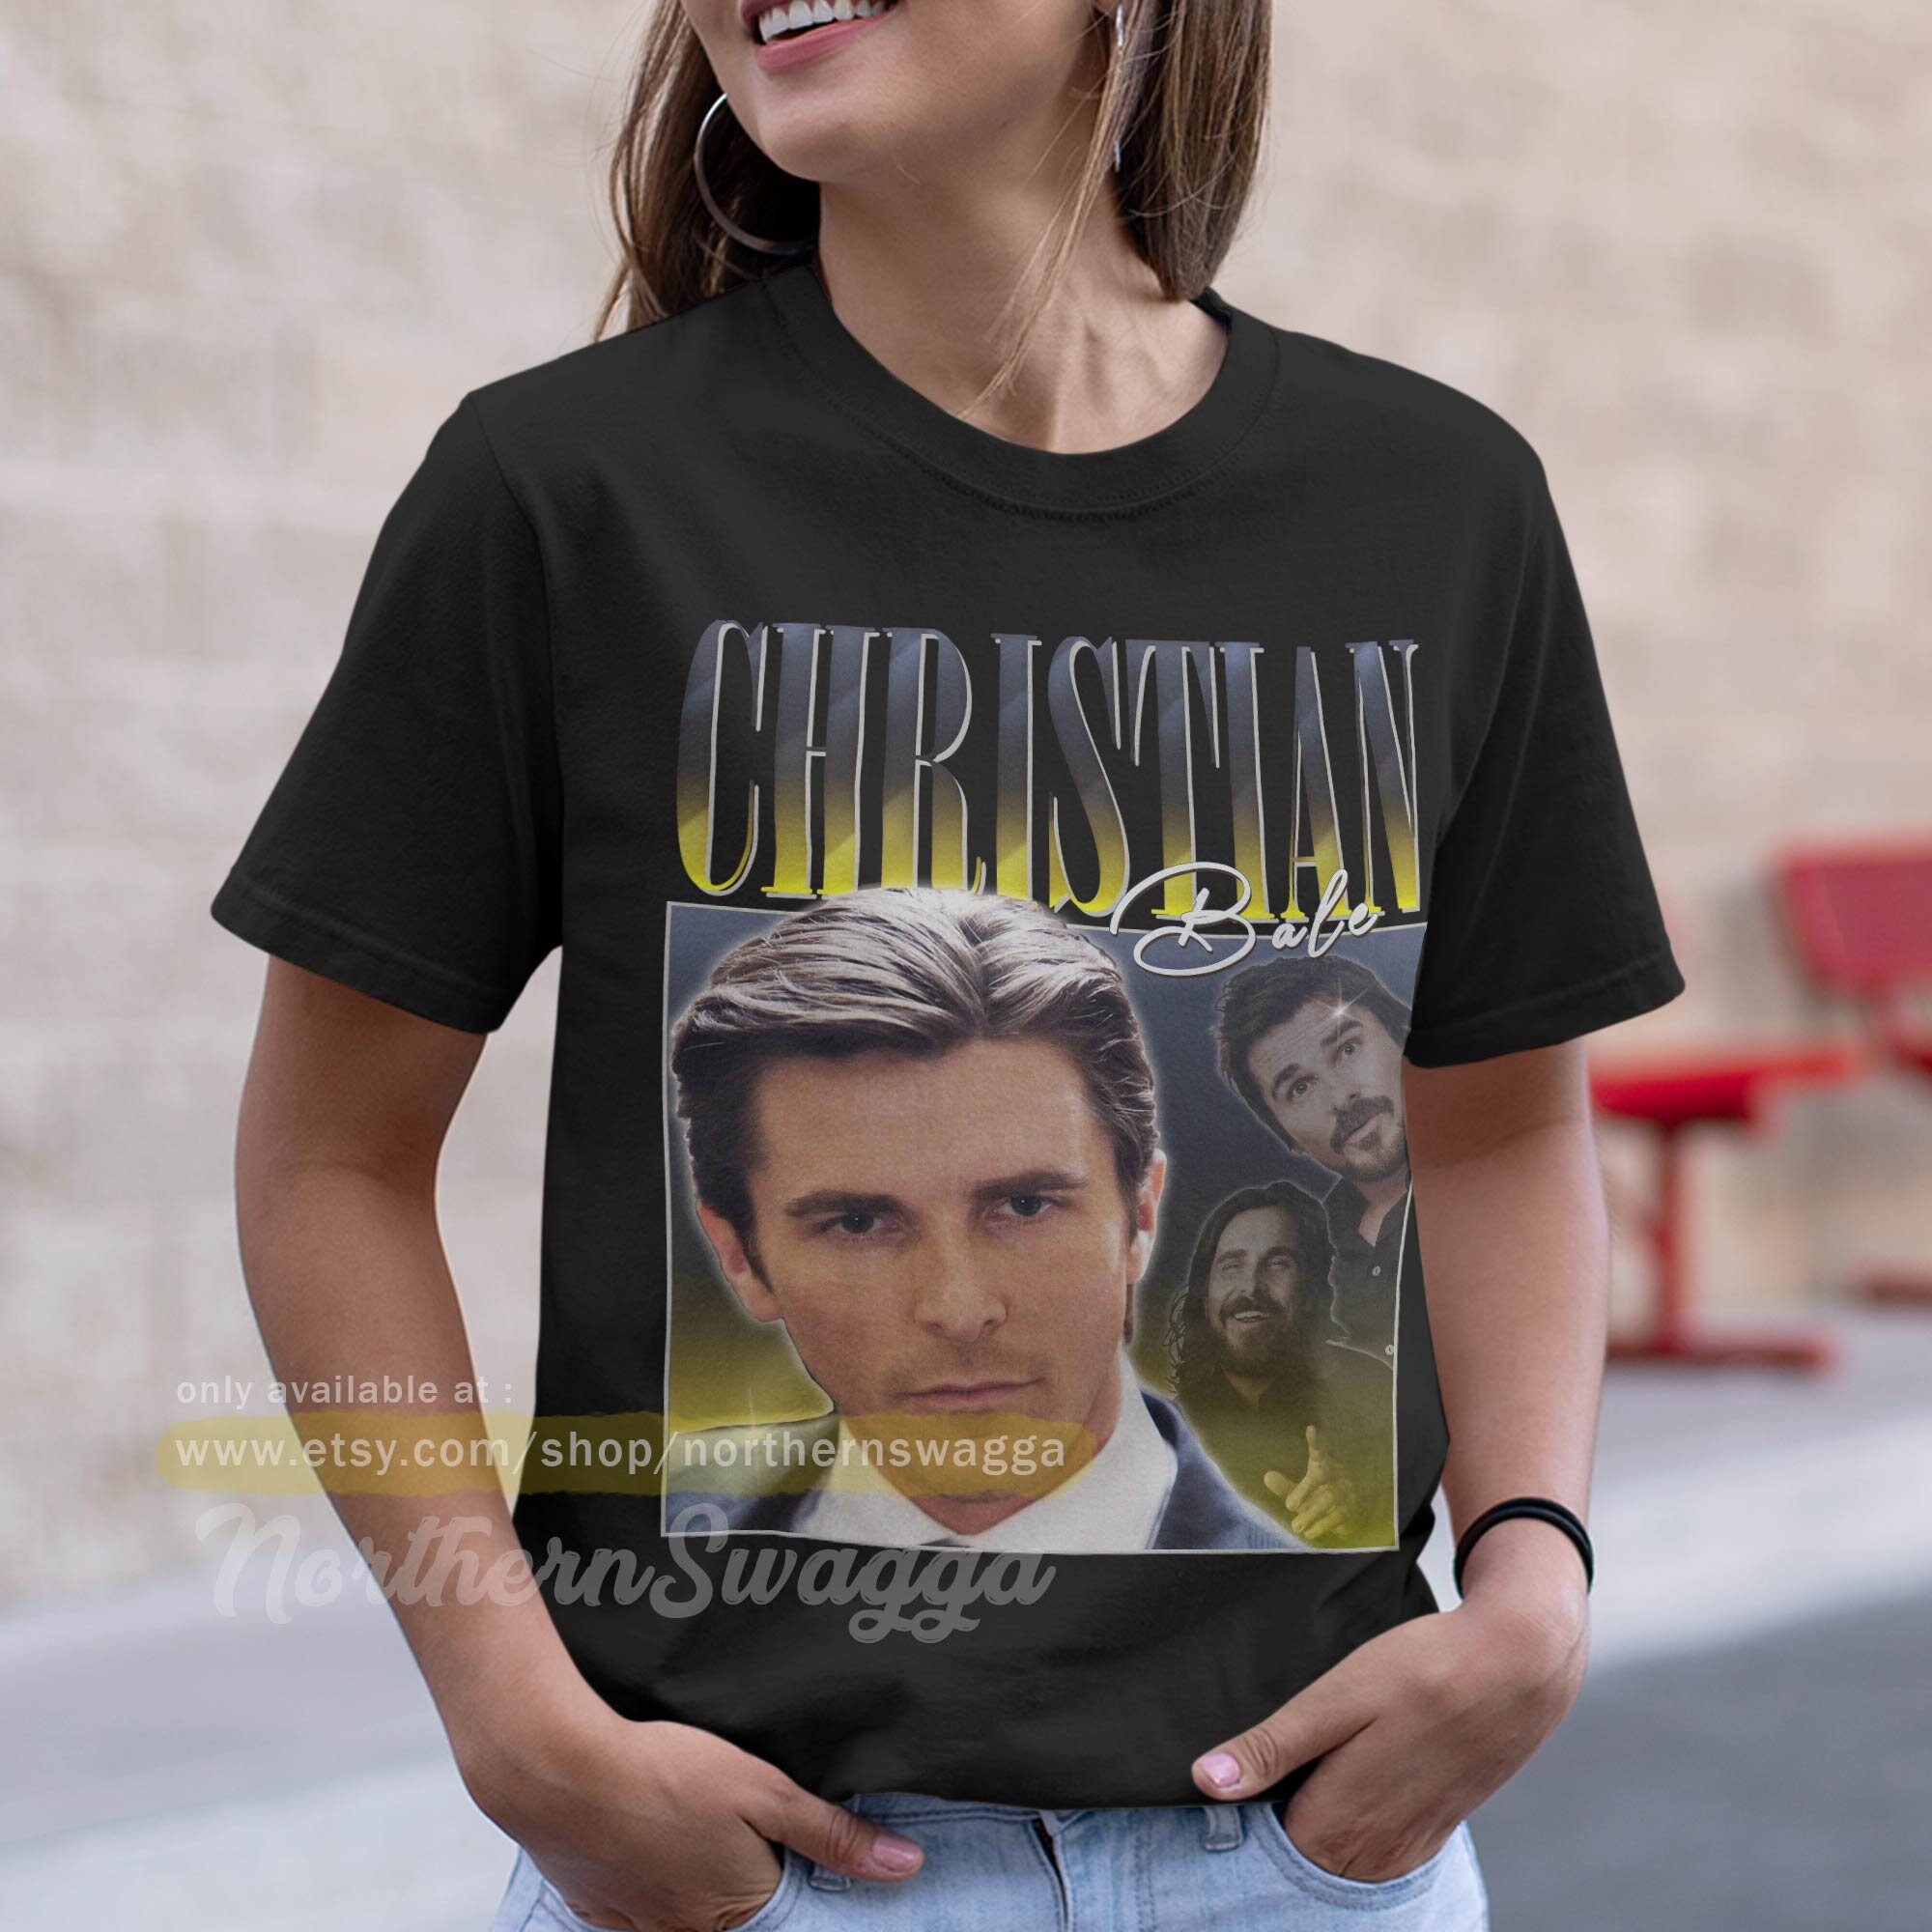 Christian bale shirt design retro style cool fan art t-shirt 90s poster 206 tee